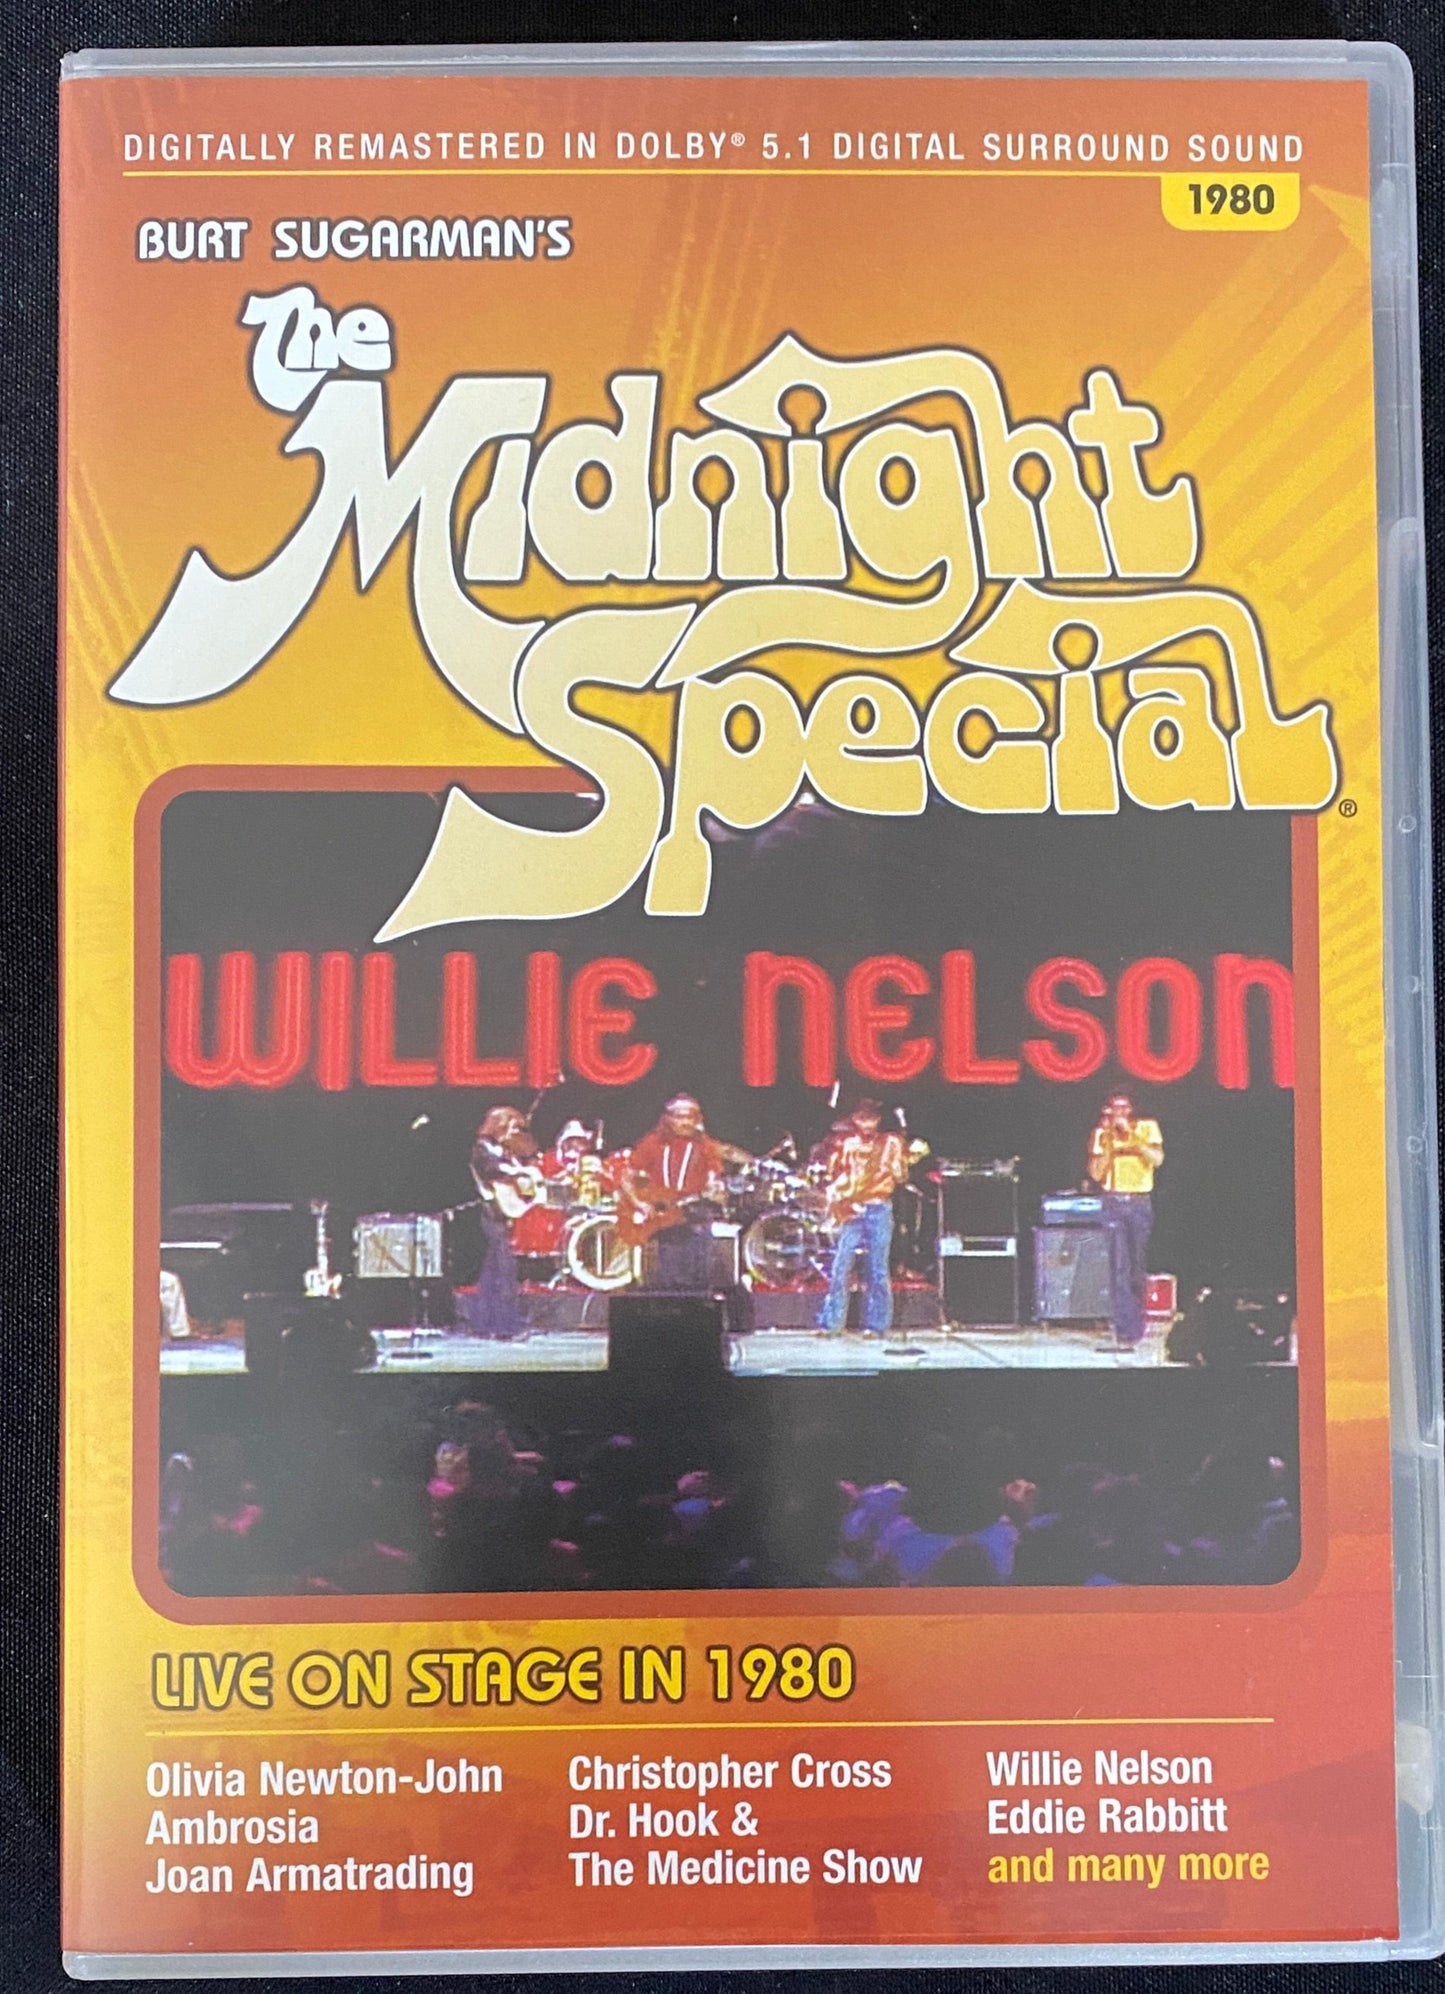 Burt Sugarman's The Midnight Special Live - 1980